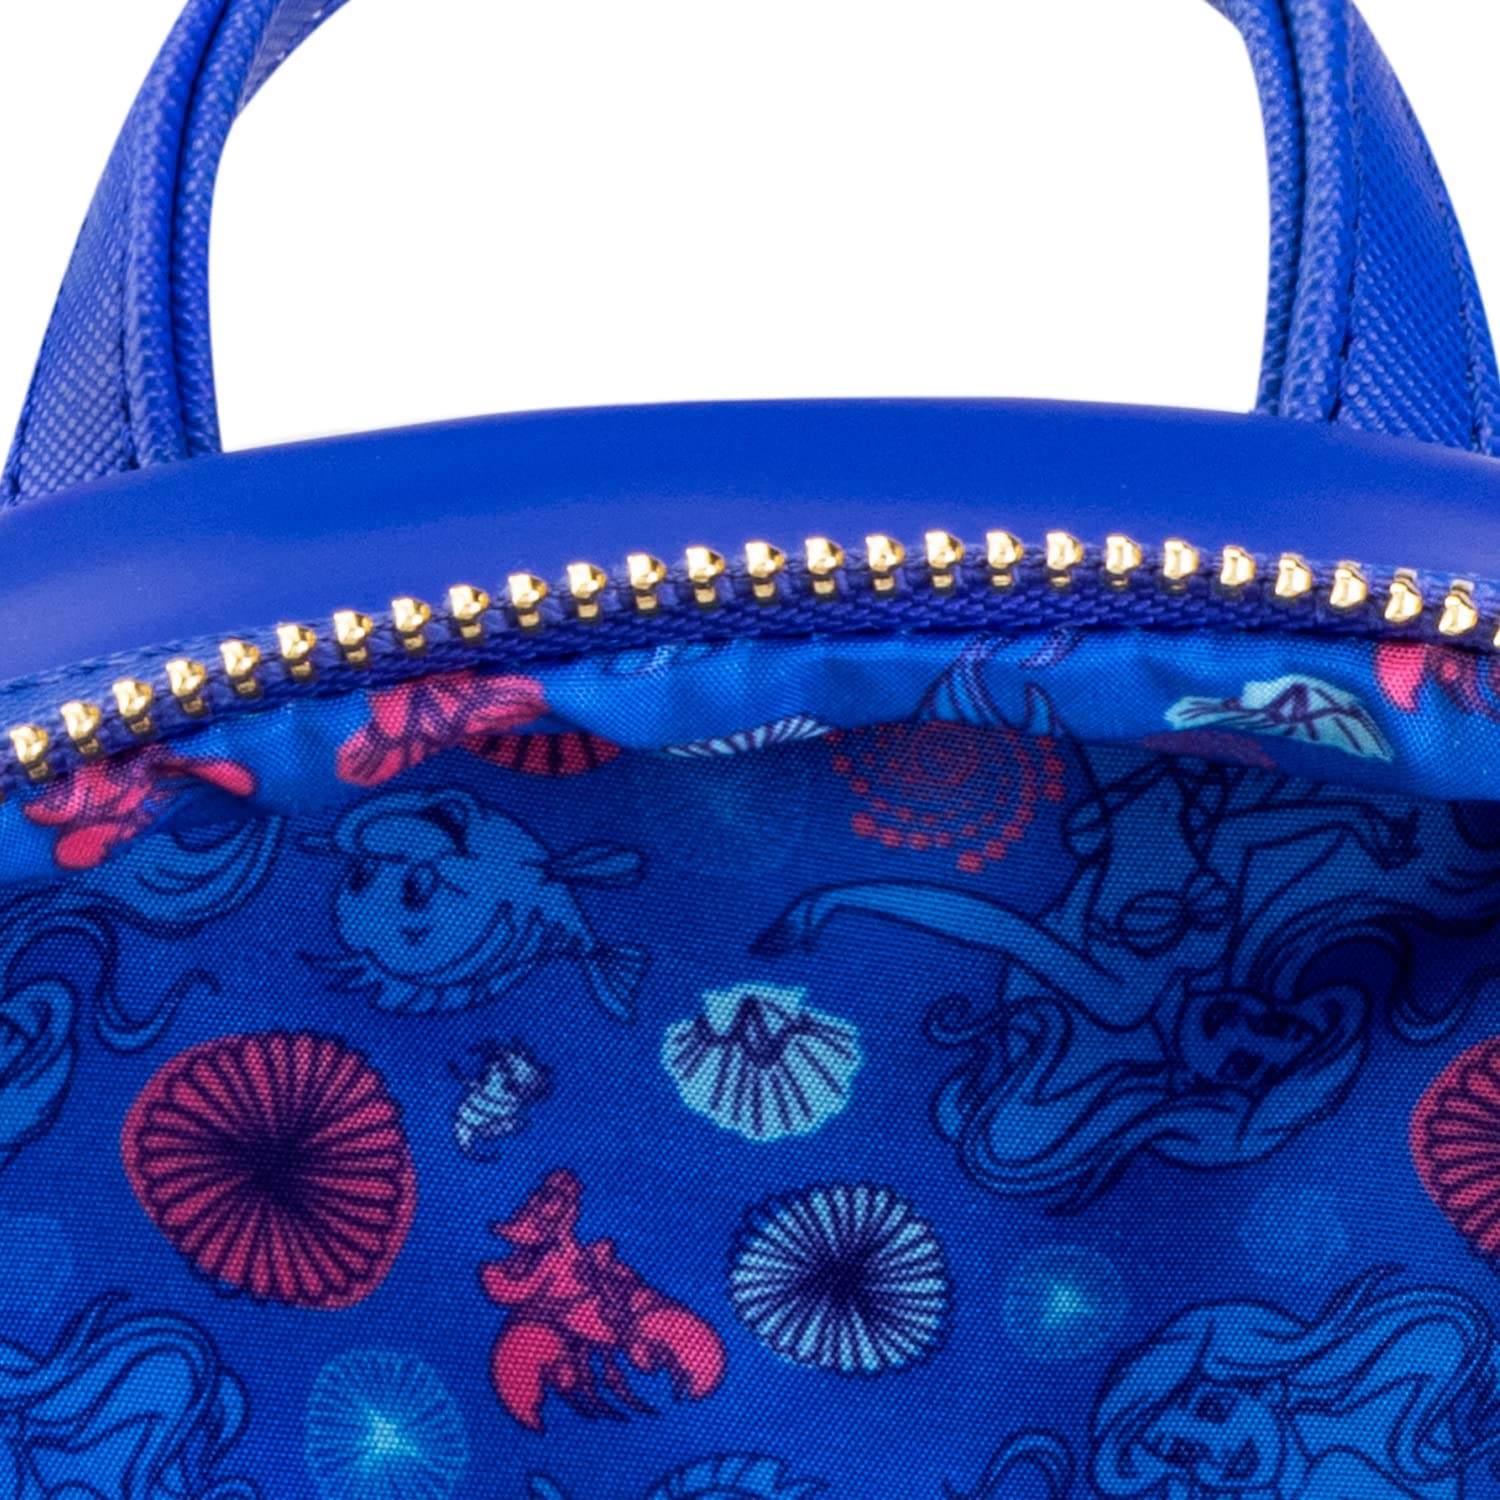 Loungefly Little Mermaid Backpack - Ariel, Amazon Exclusive Disney